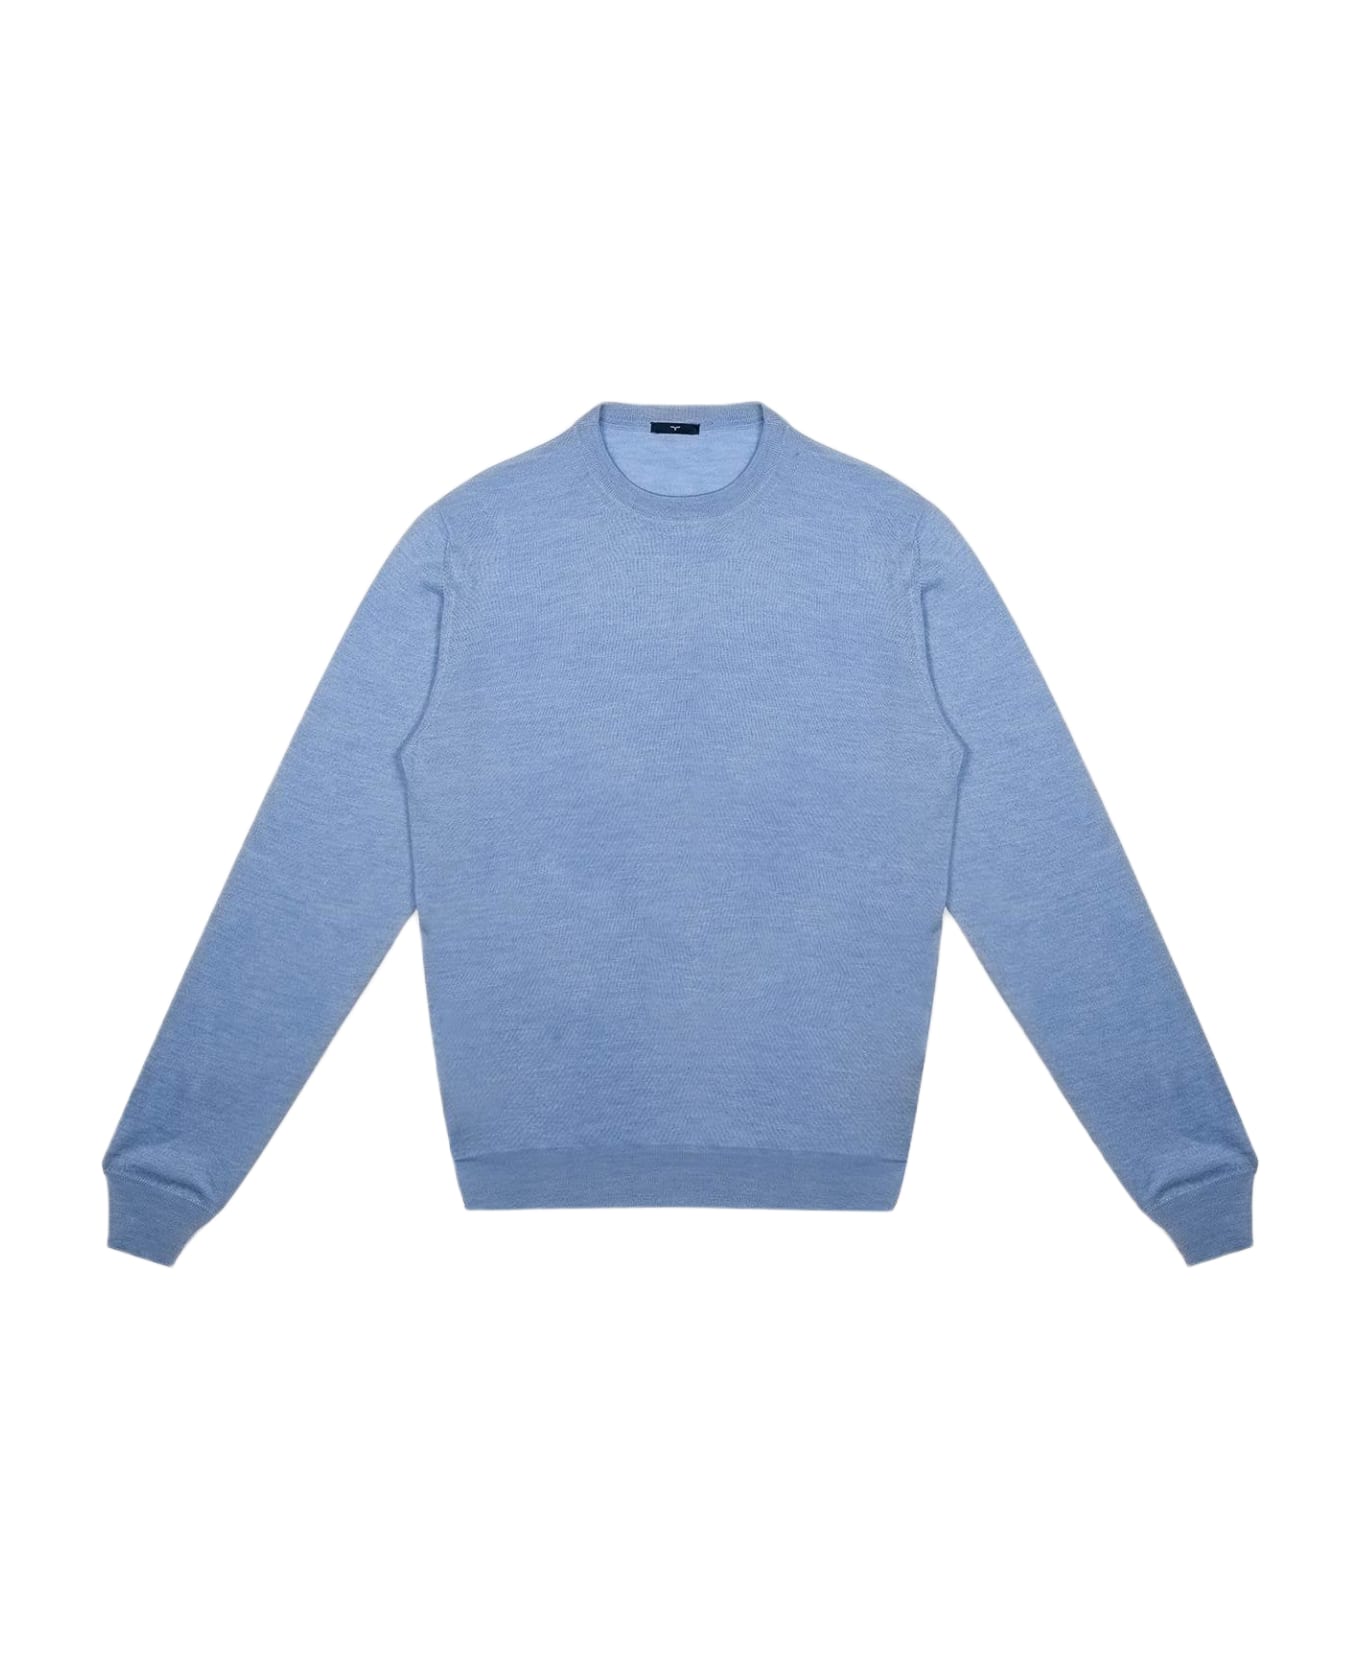 Larusmiani Sweater 'pullman' Sweater - LightBlue